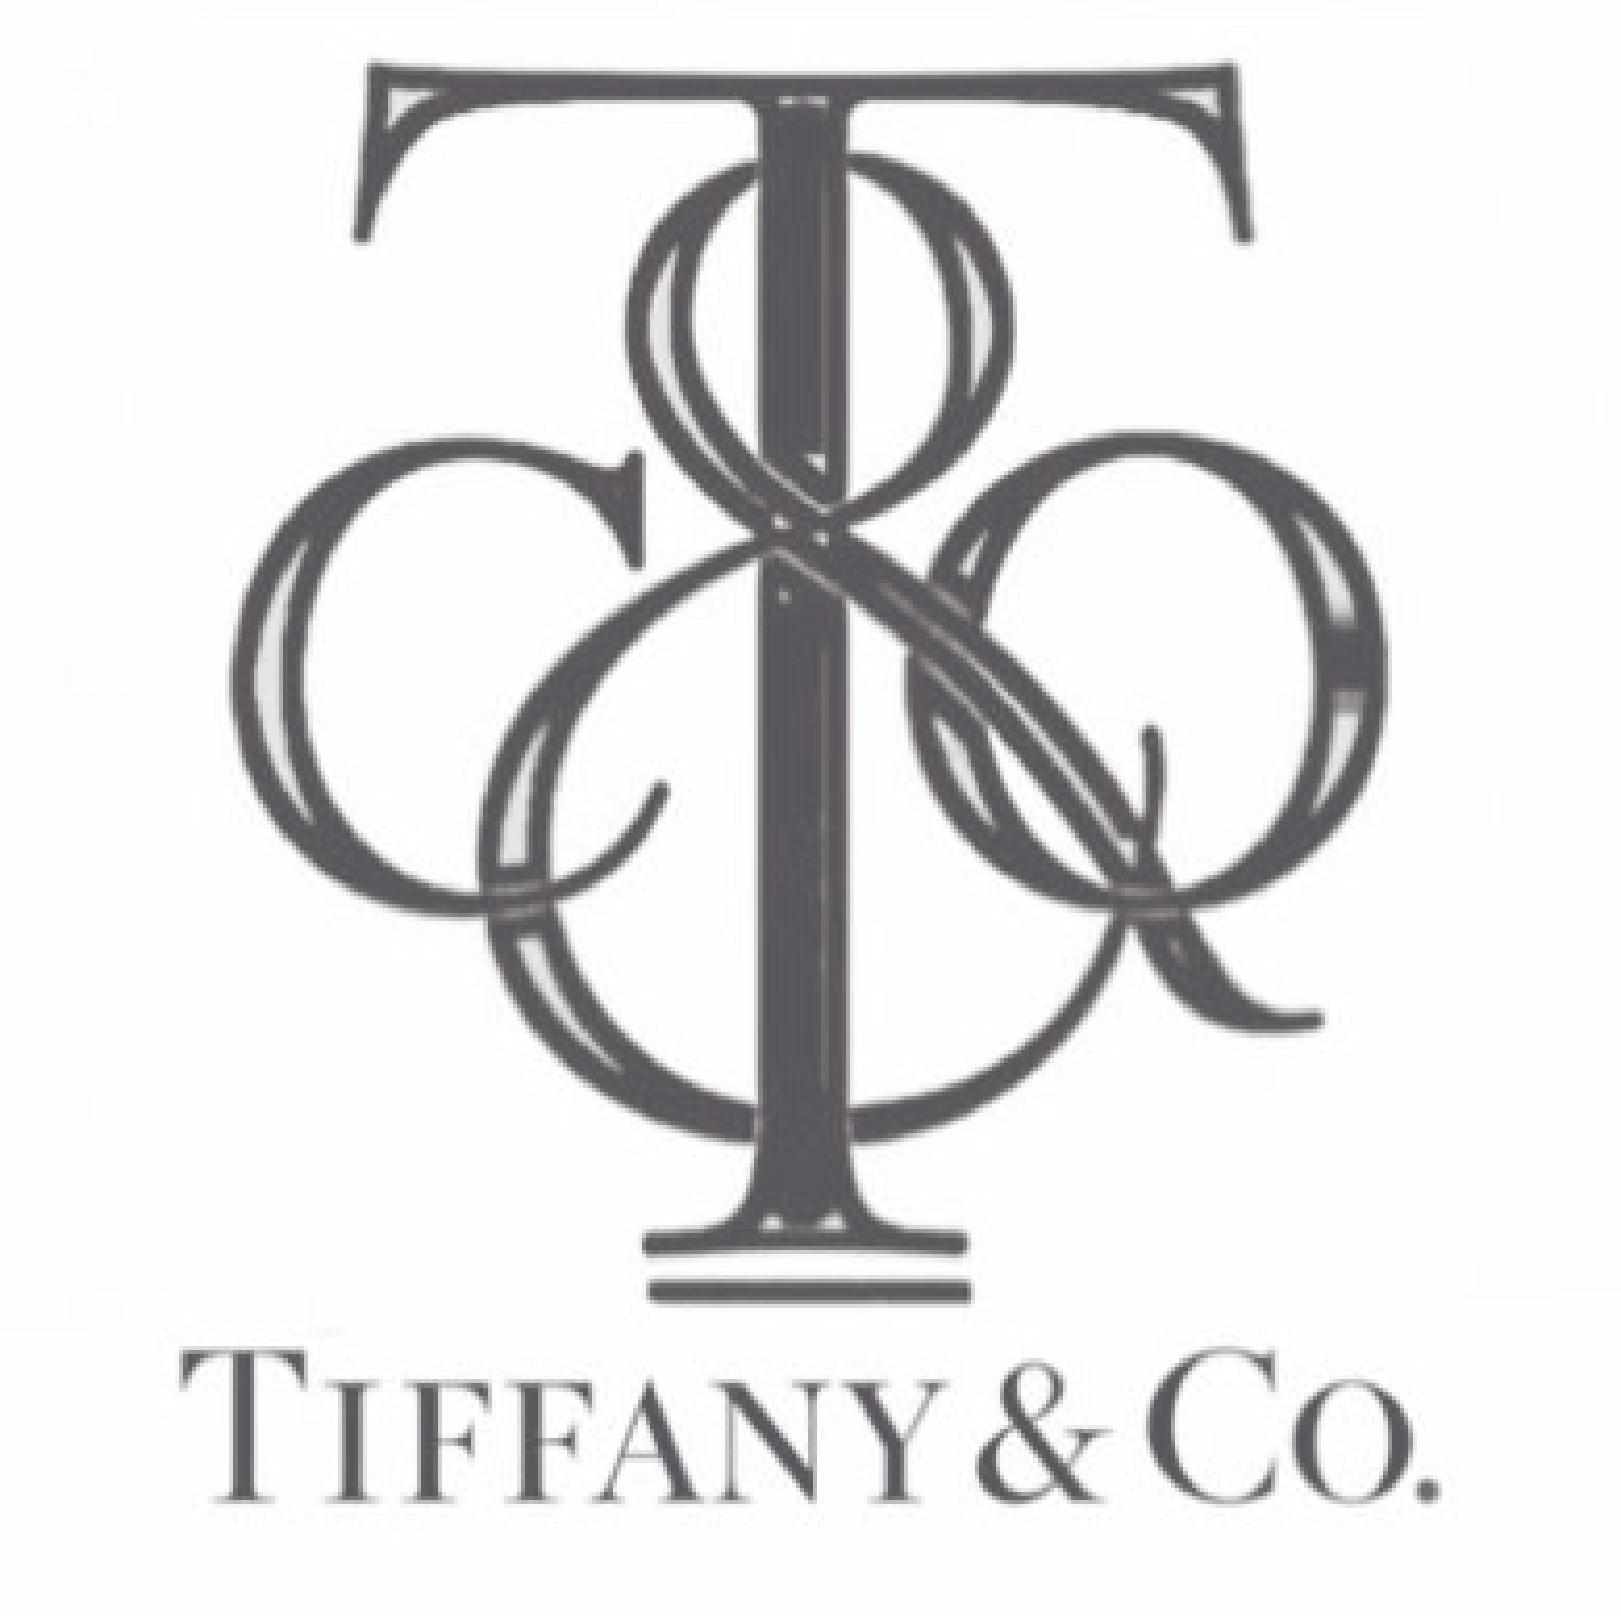 Cherished replicas capturing Tiffany's elegance